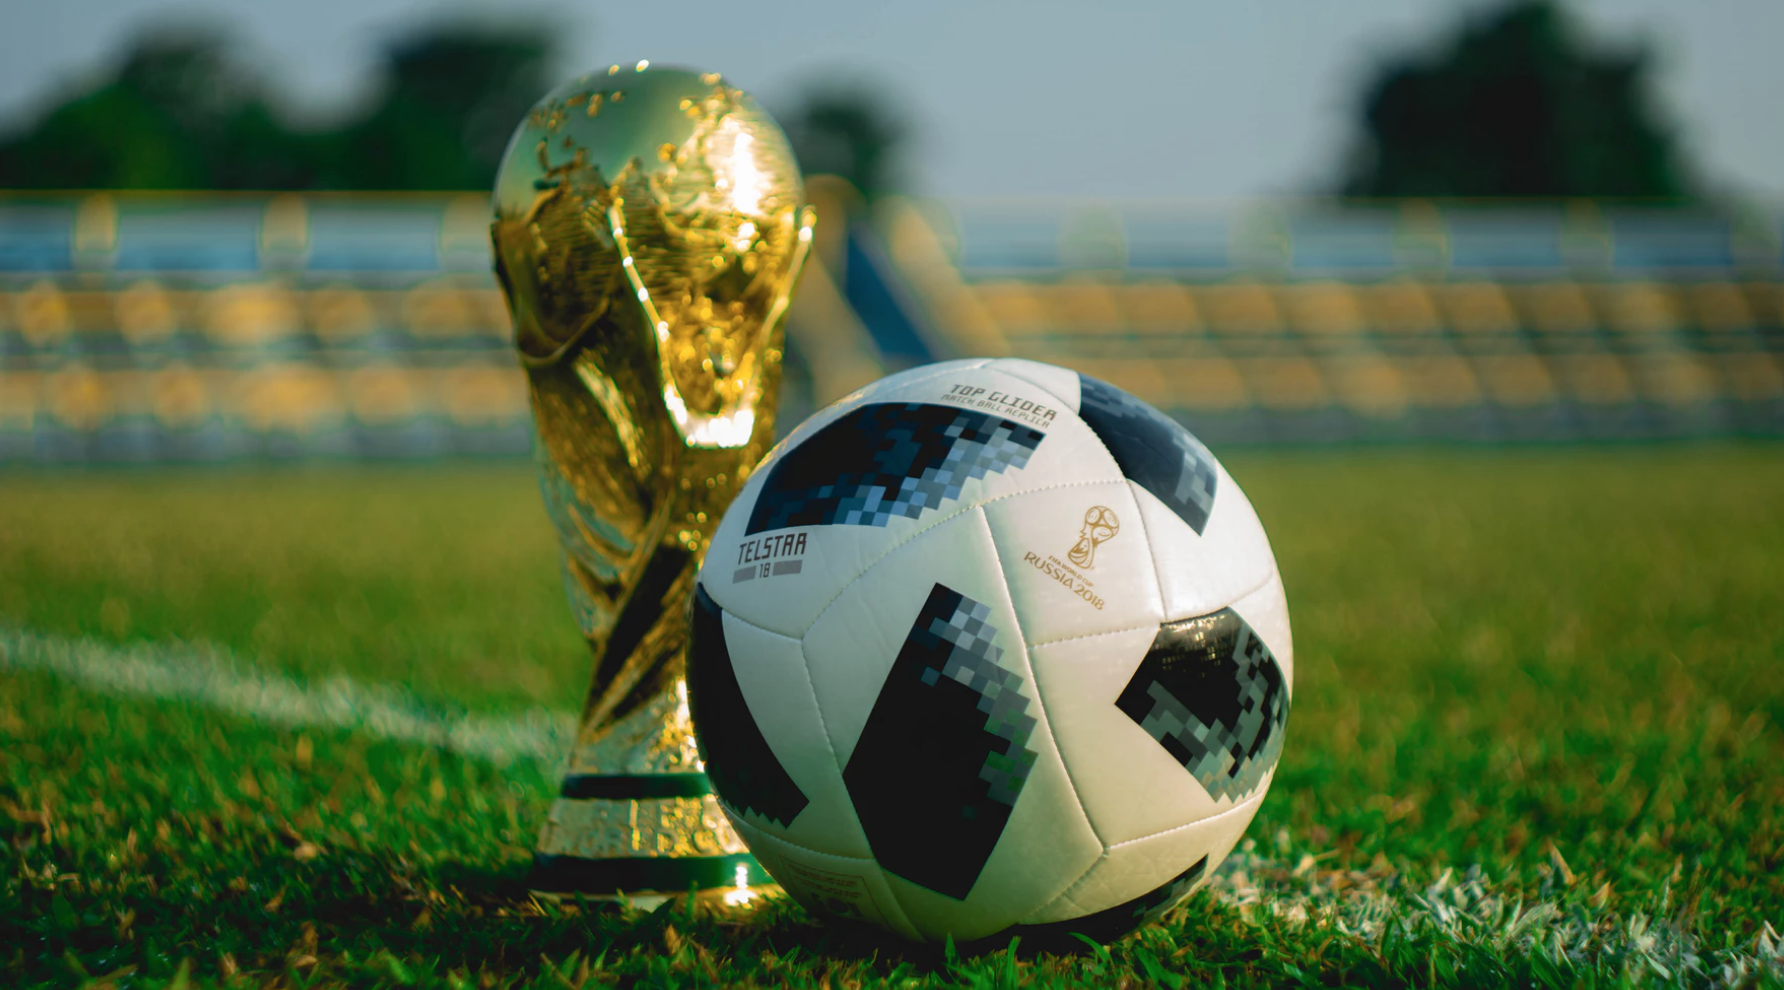 FIFA World Cup Intellectual Property Design - Telstar 18 football